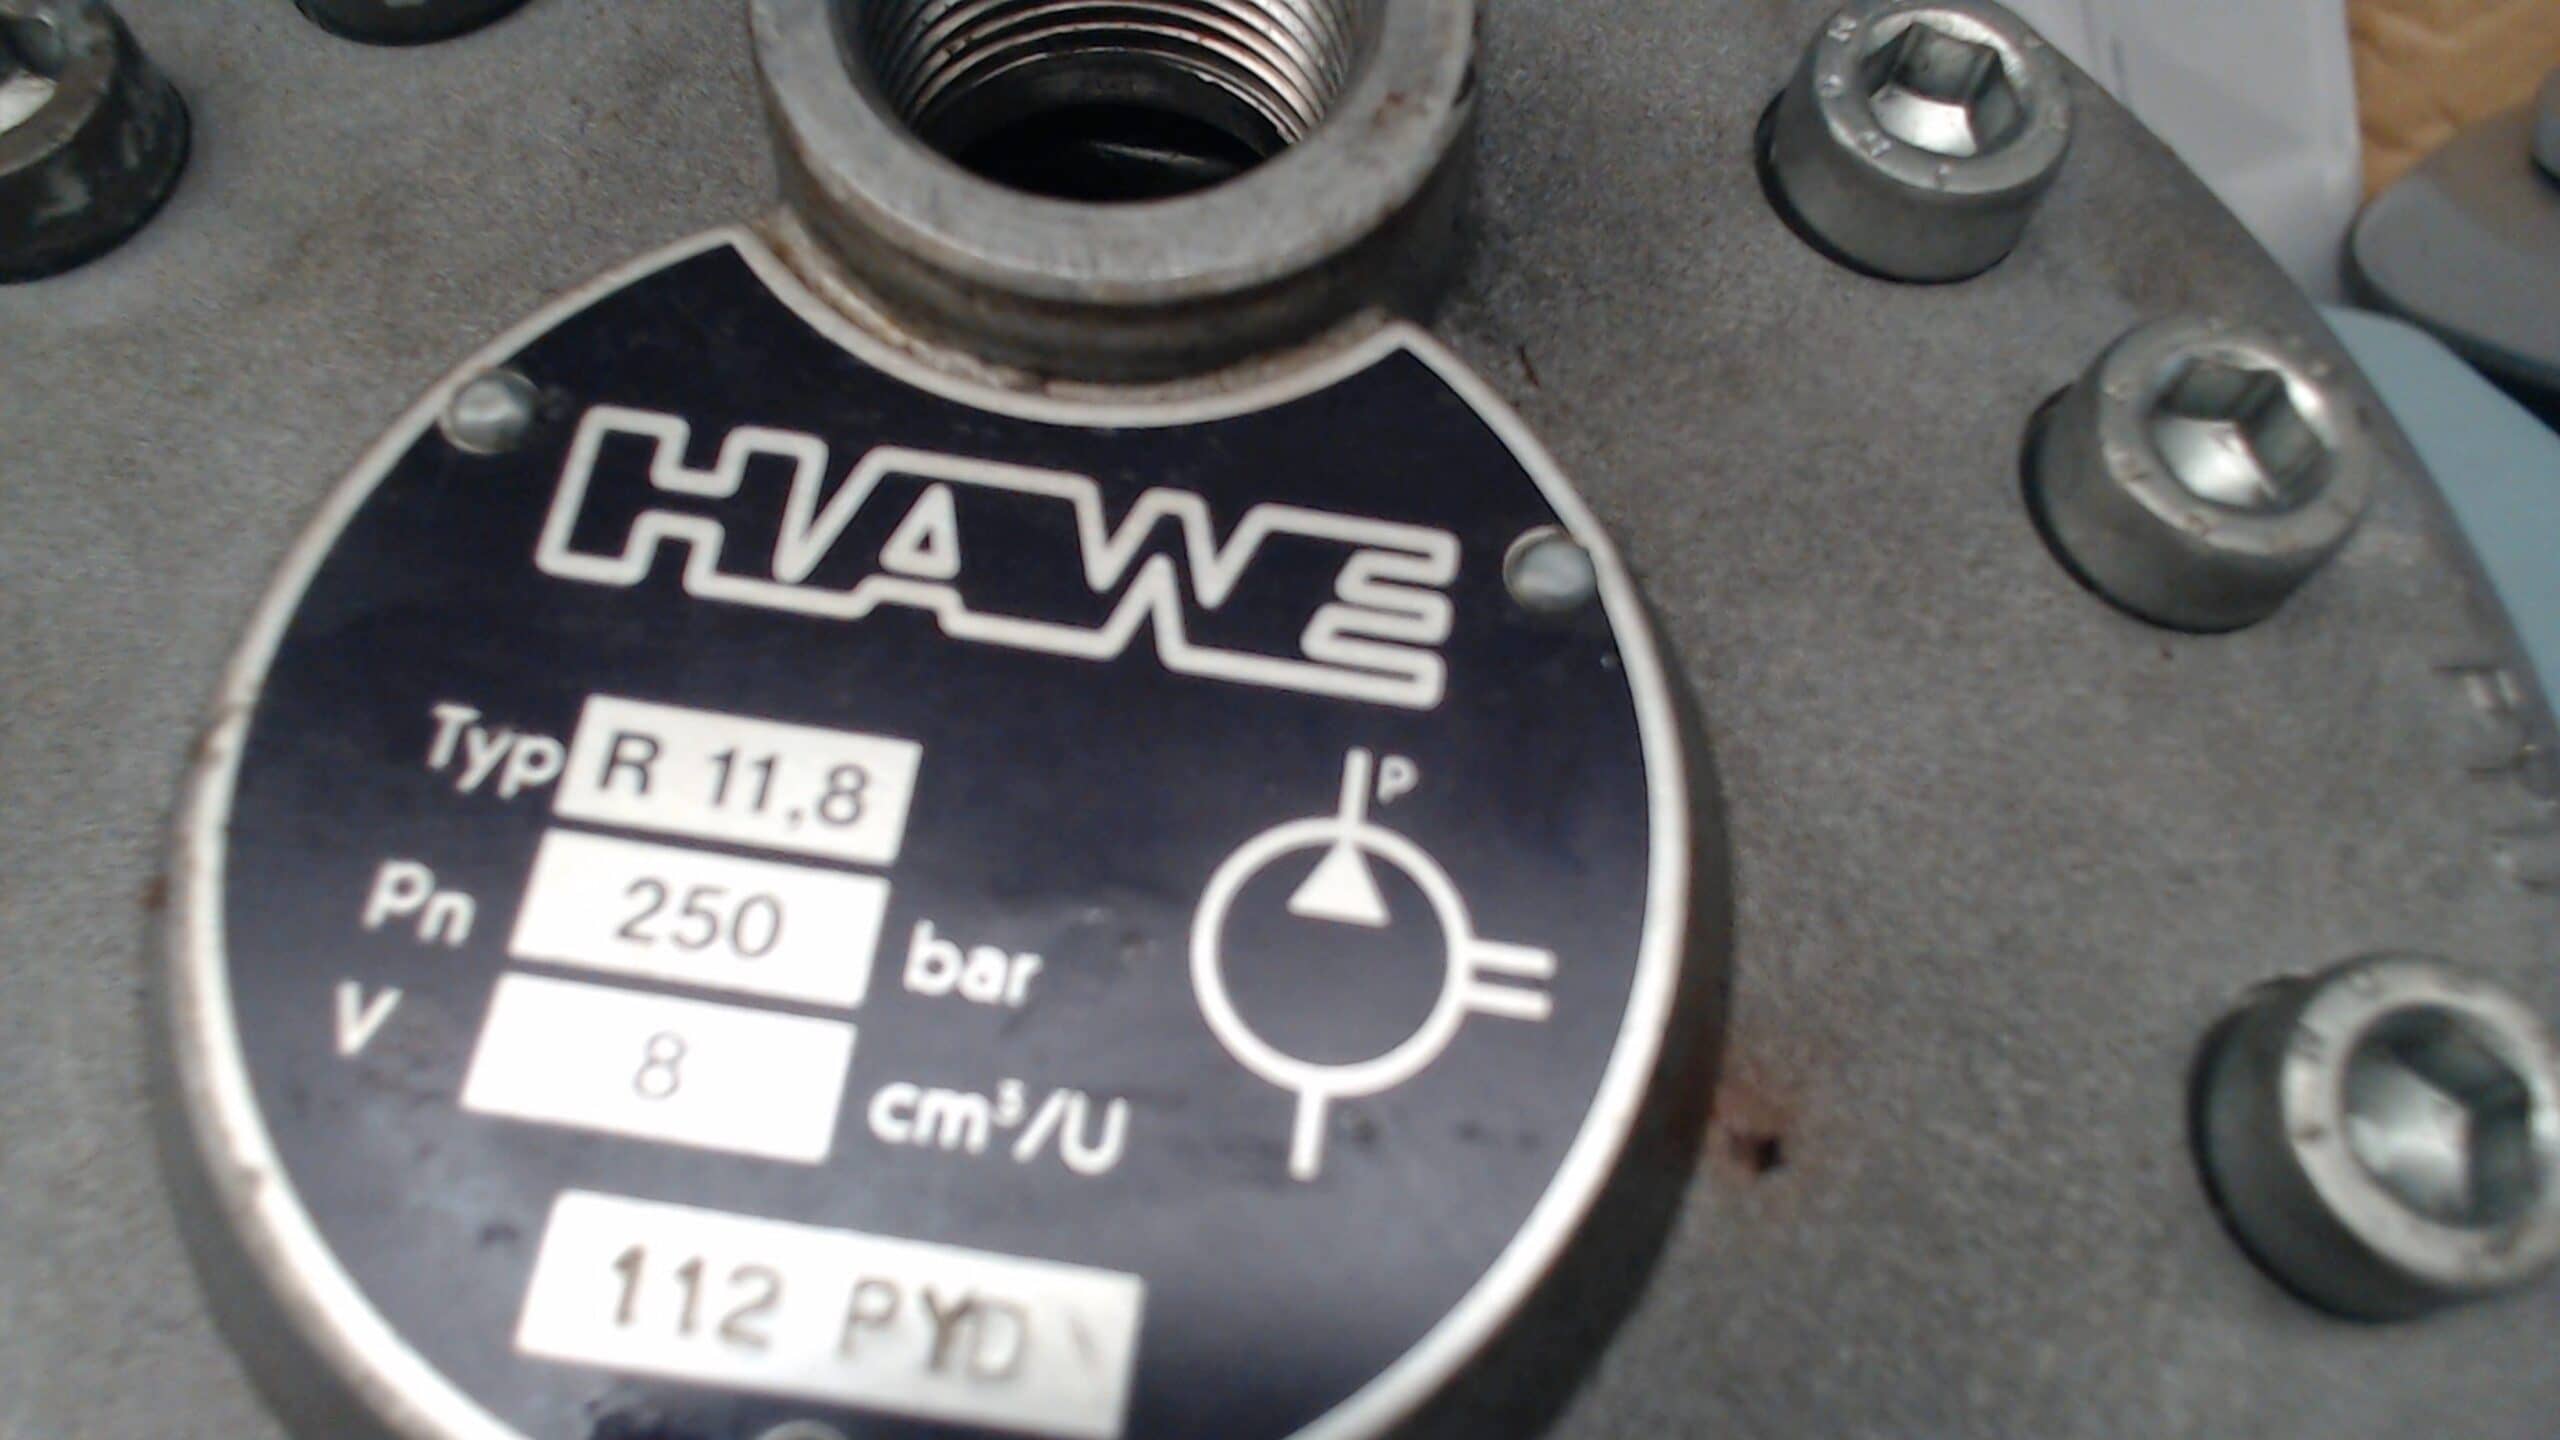 HAWE Radian piston pum valve type R11,8 PN 250 Bar V 9 cm3/u 112 pyd-3467